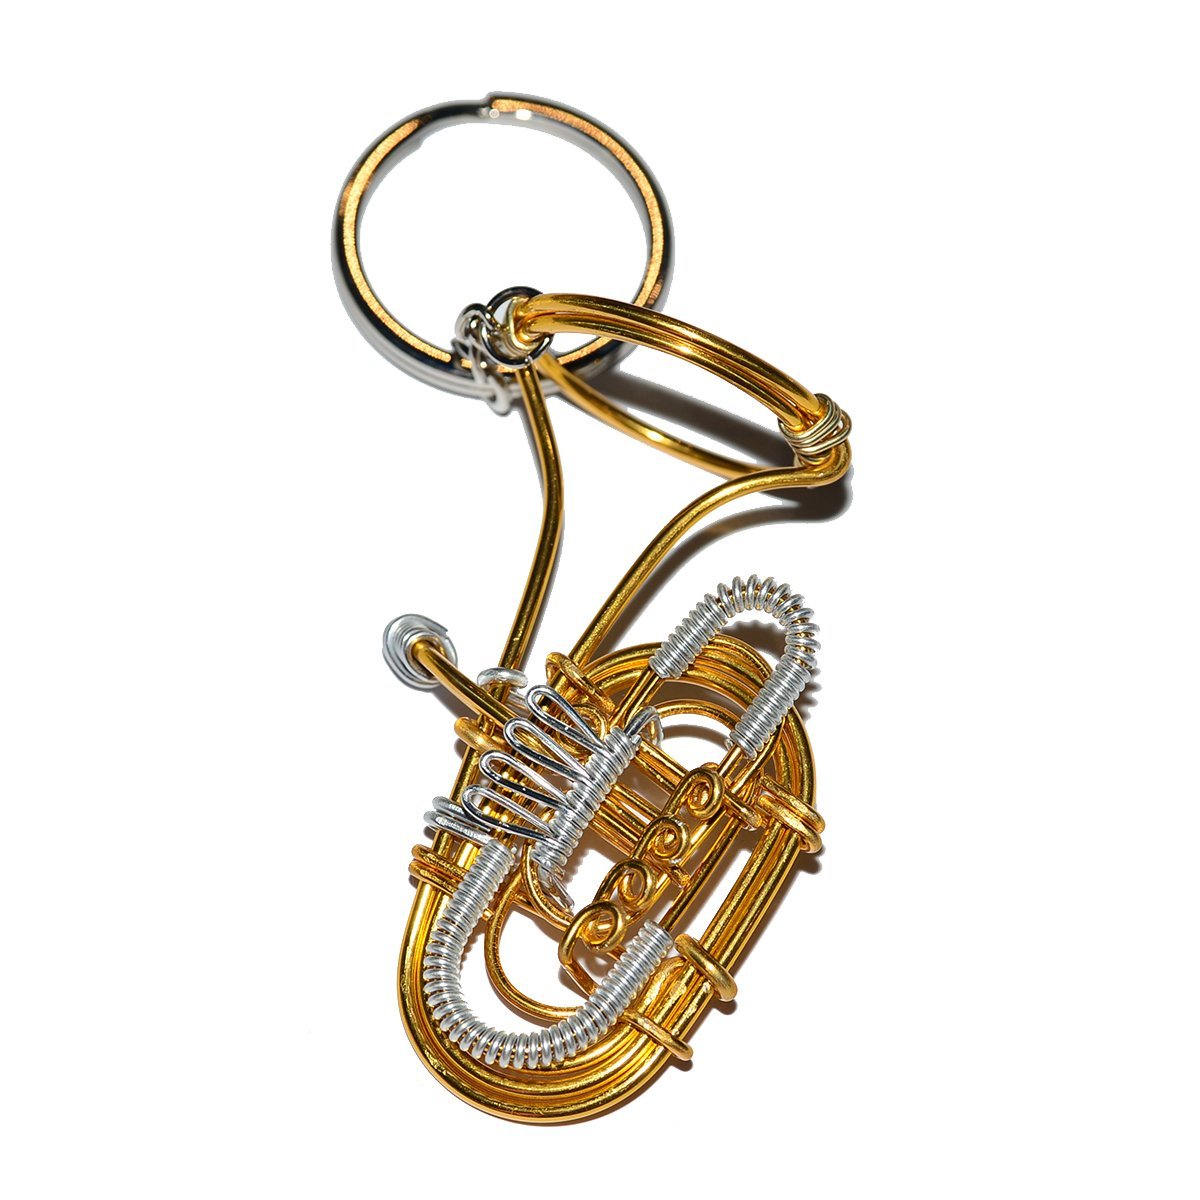 Brass Instrument Ornaments